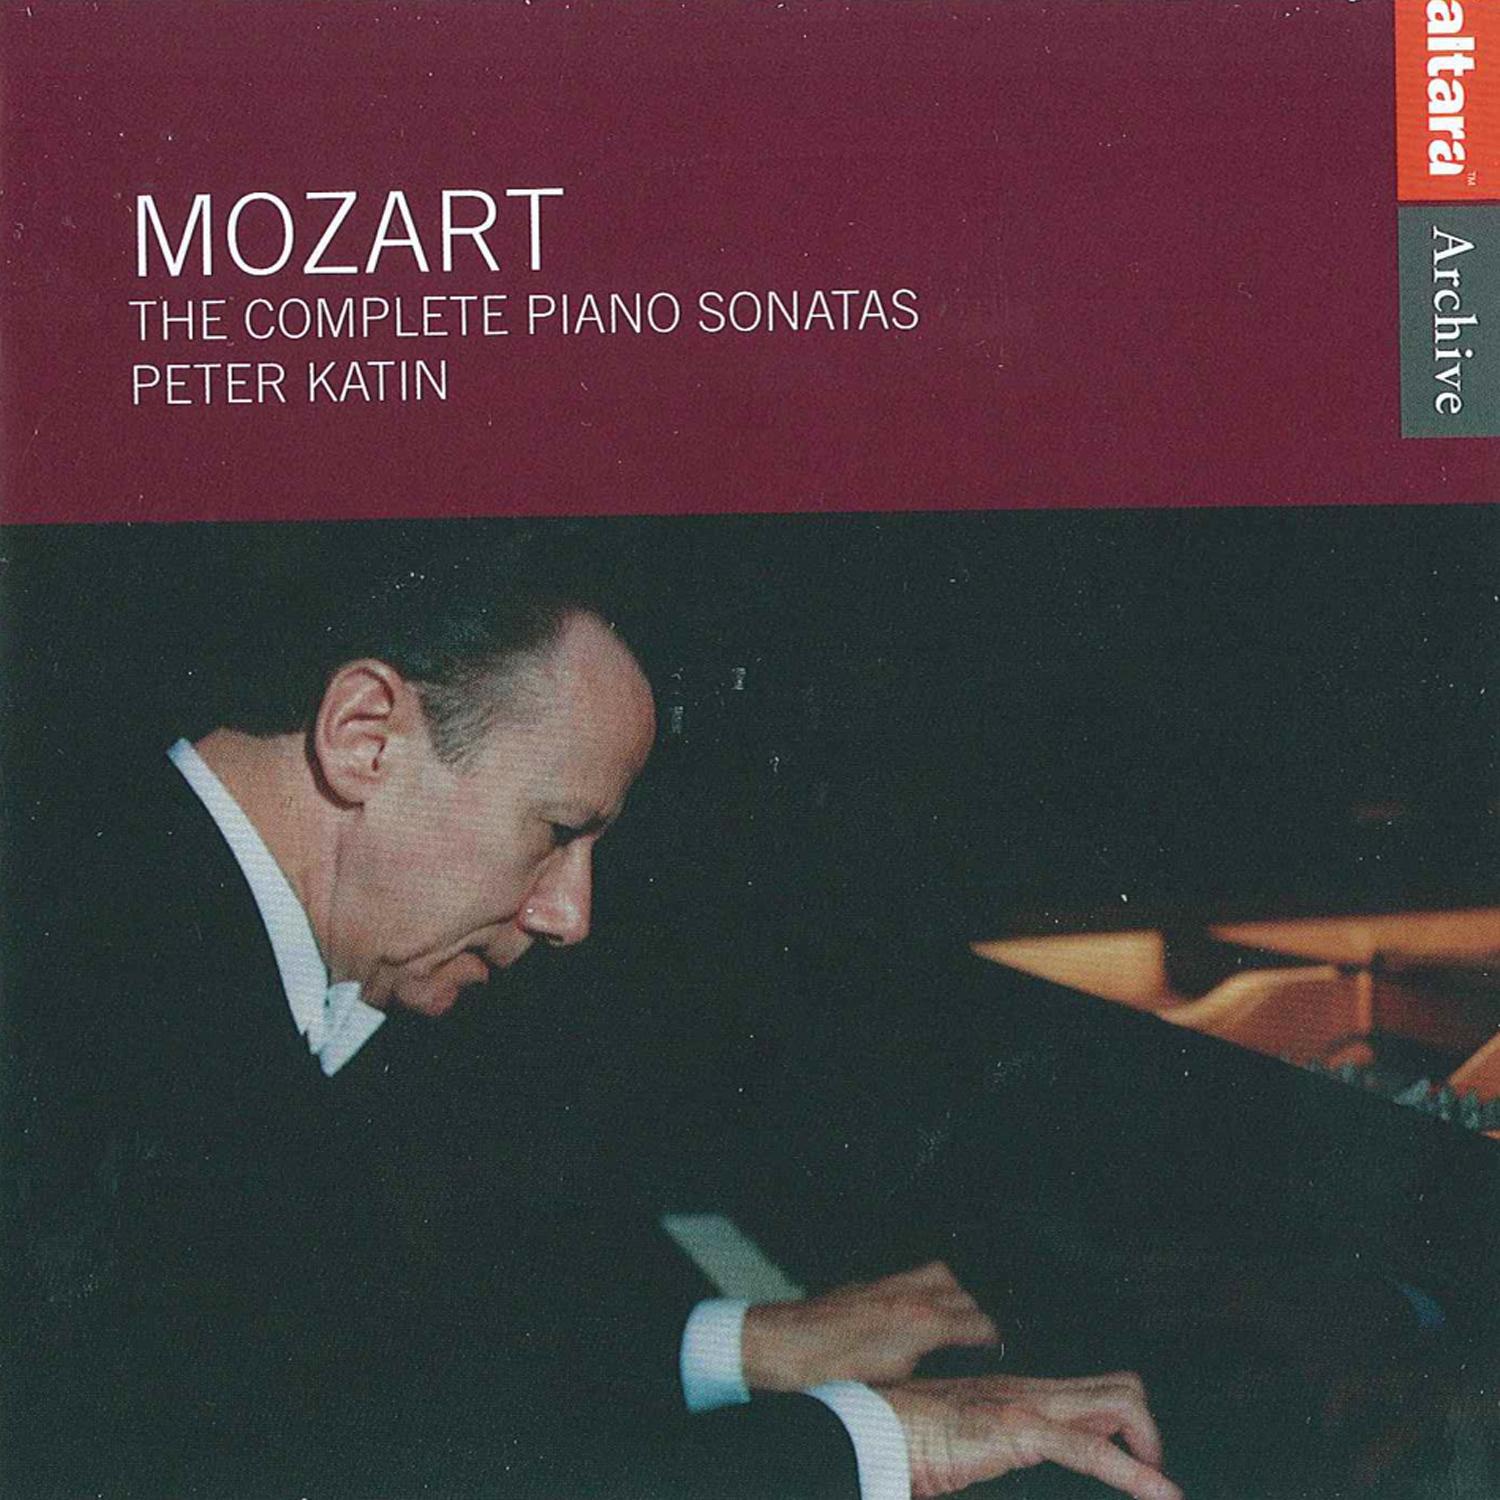 Mozart: The Complete Piano Sonatas - Peter Katin